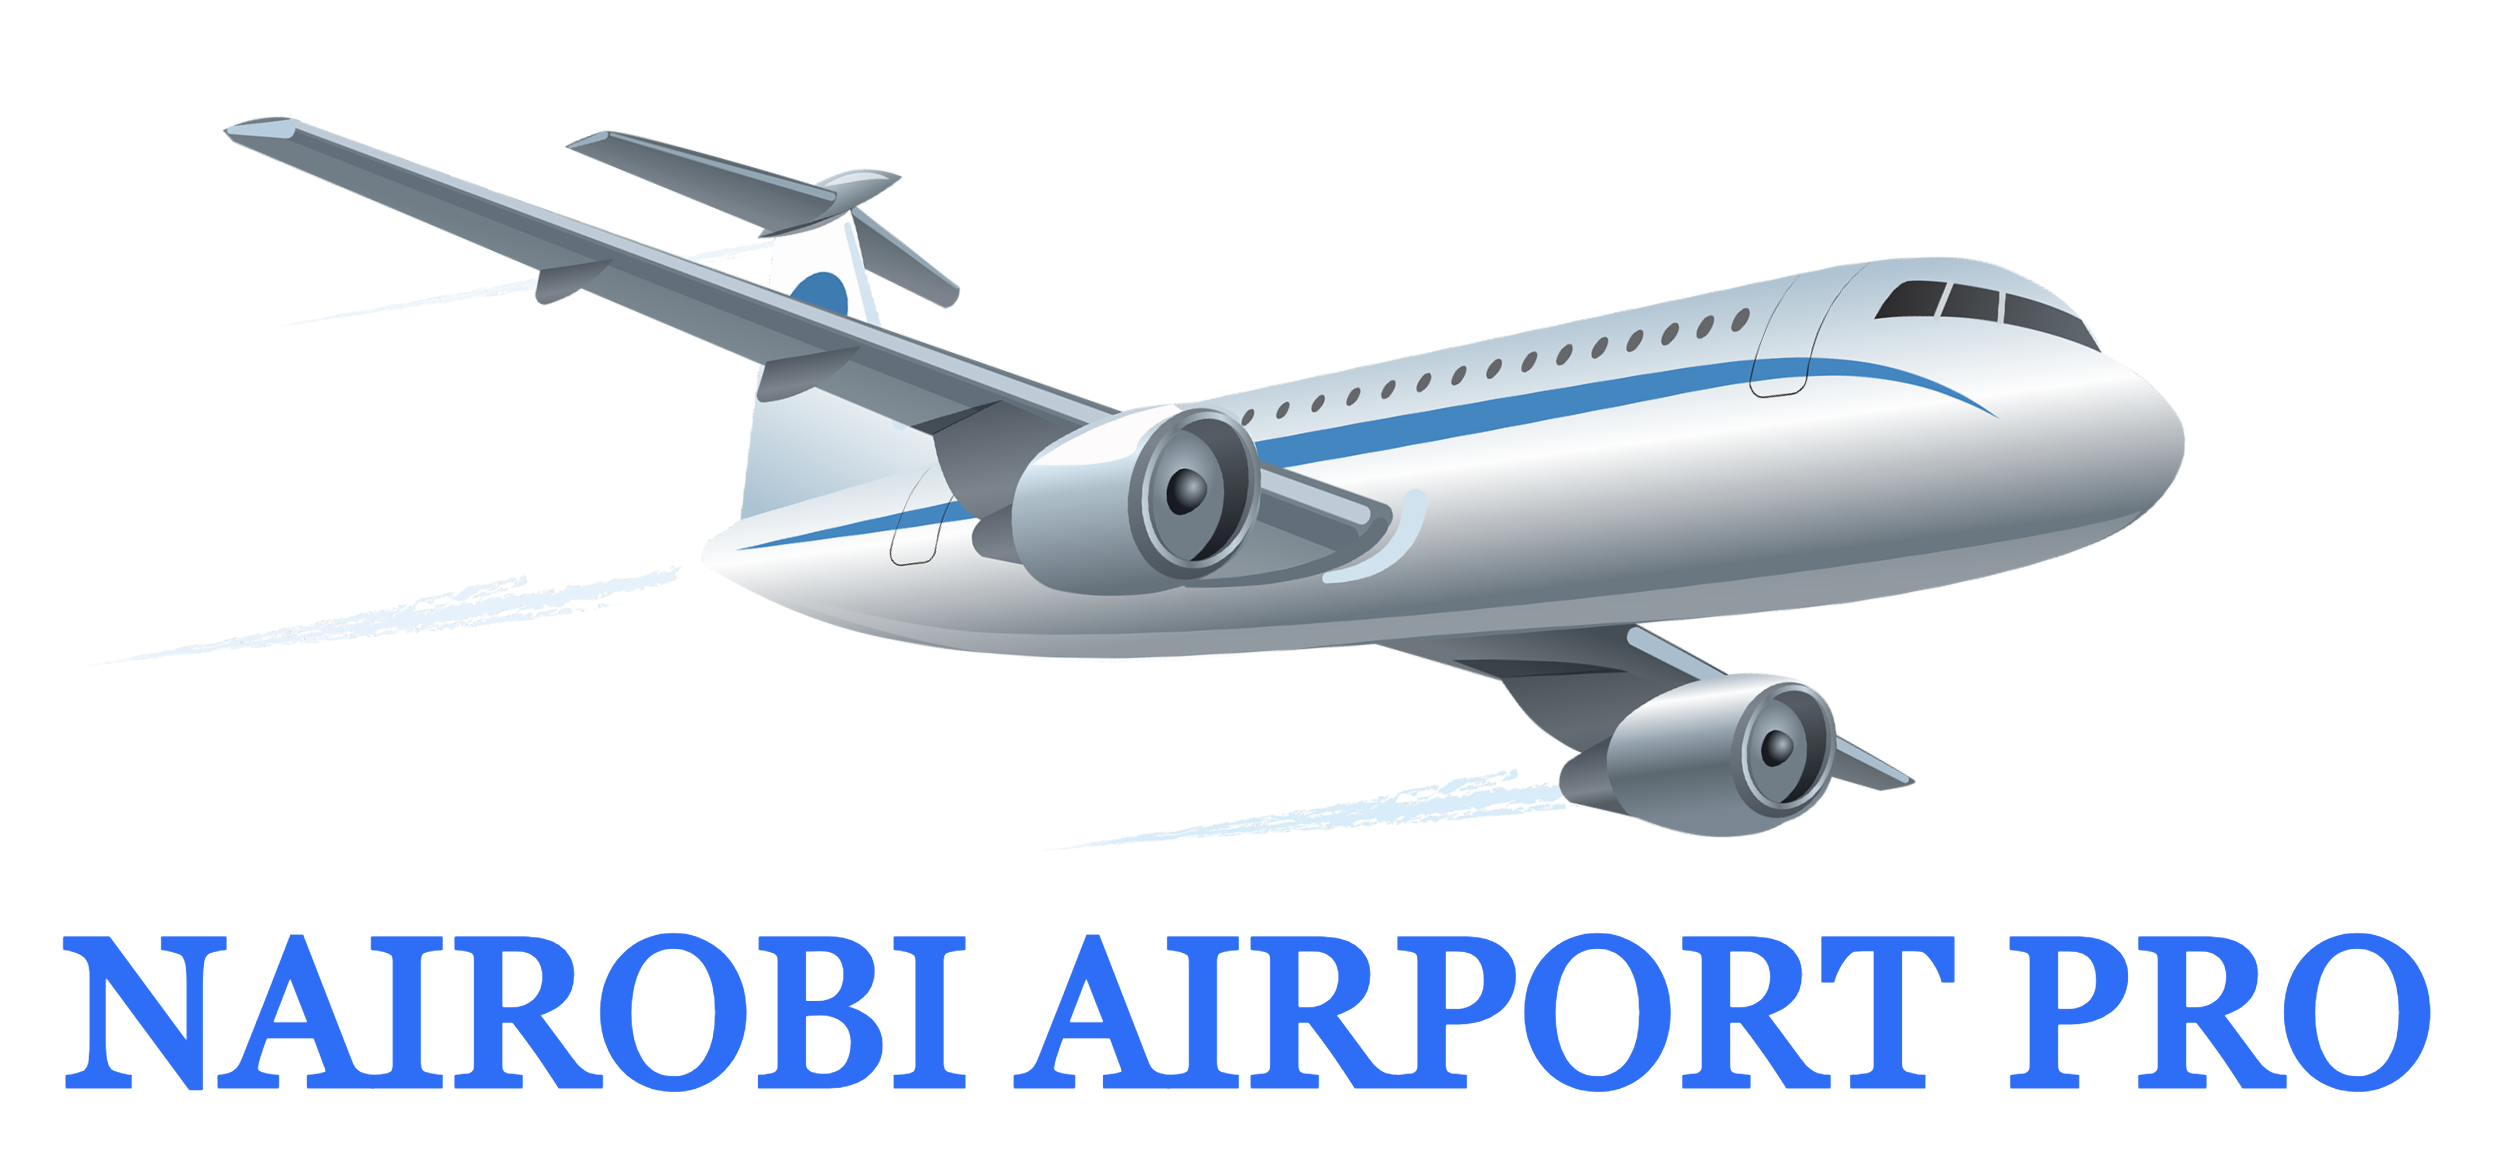 Nairobi Airport Pro | Accommodations list layouts - Nairobi Airport Pro